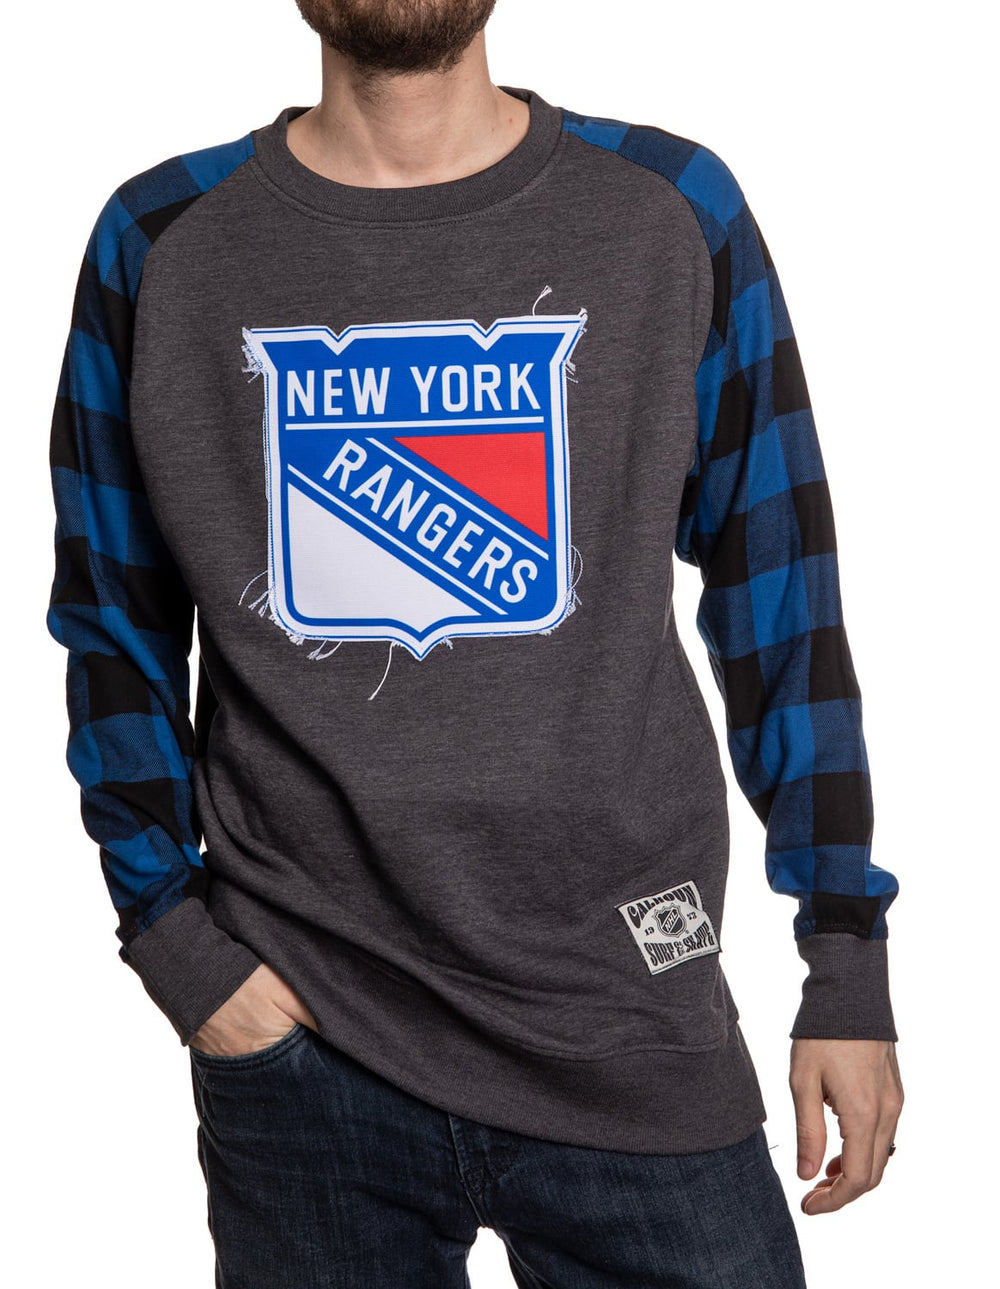 New York Rangers Buffalo Plaid Long Sleeve Shirt Front View